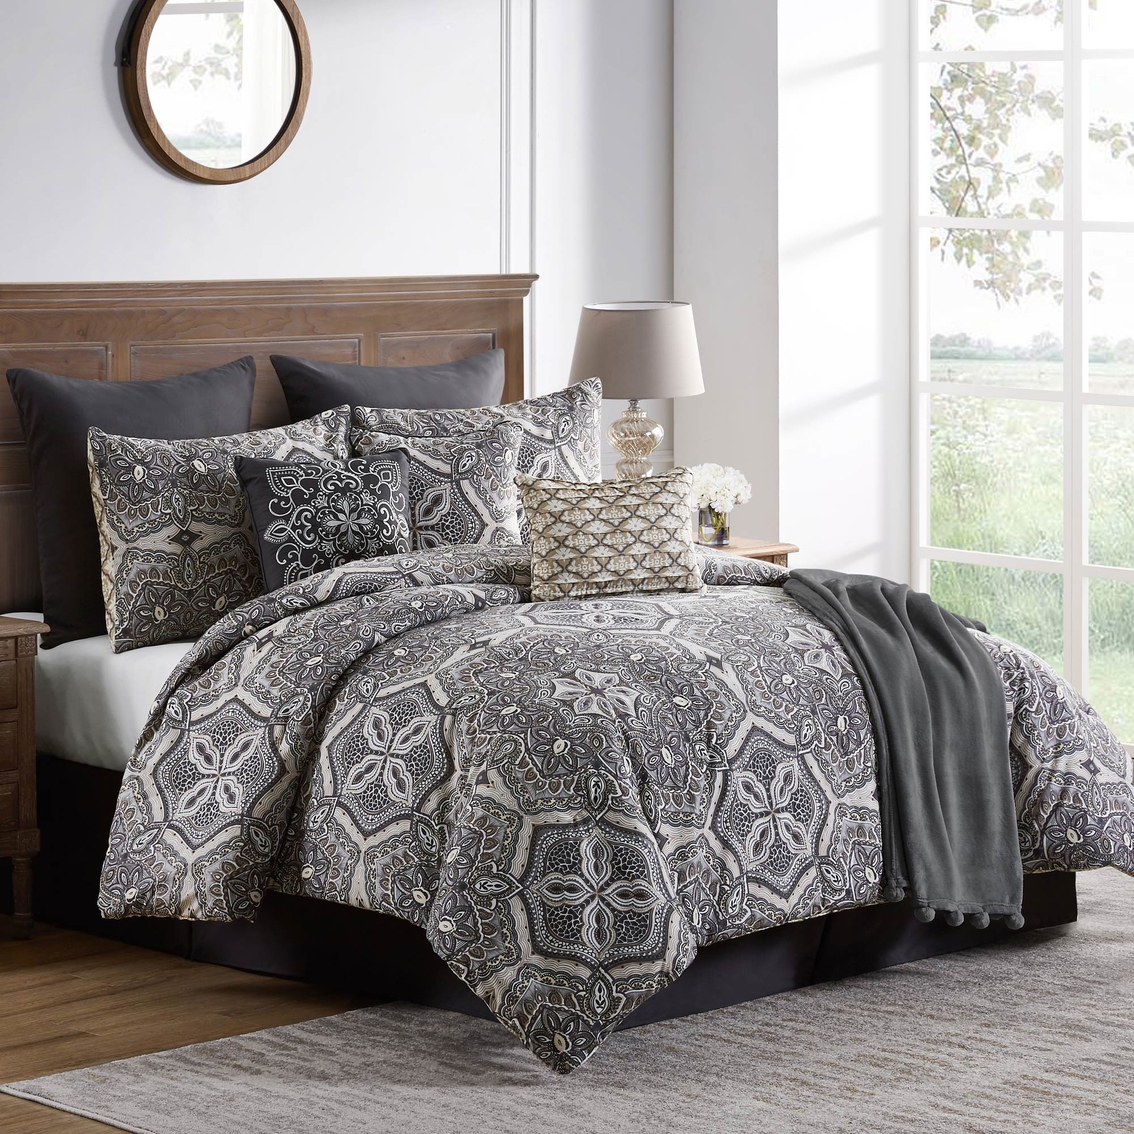 VCNY Home Belinda 12 Pc. Comforter Set - Image 2 of 3